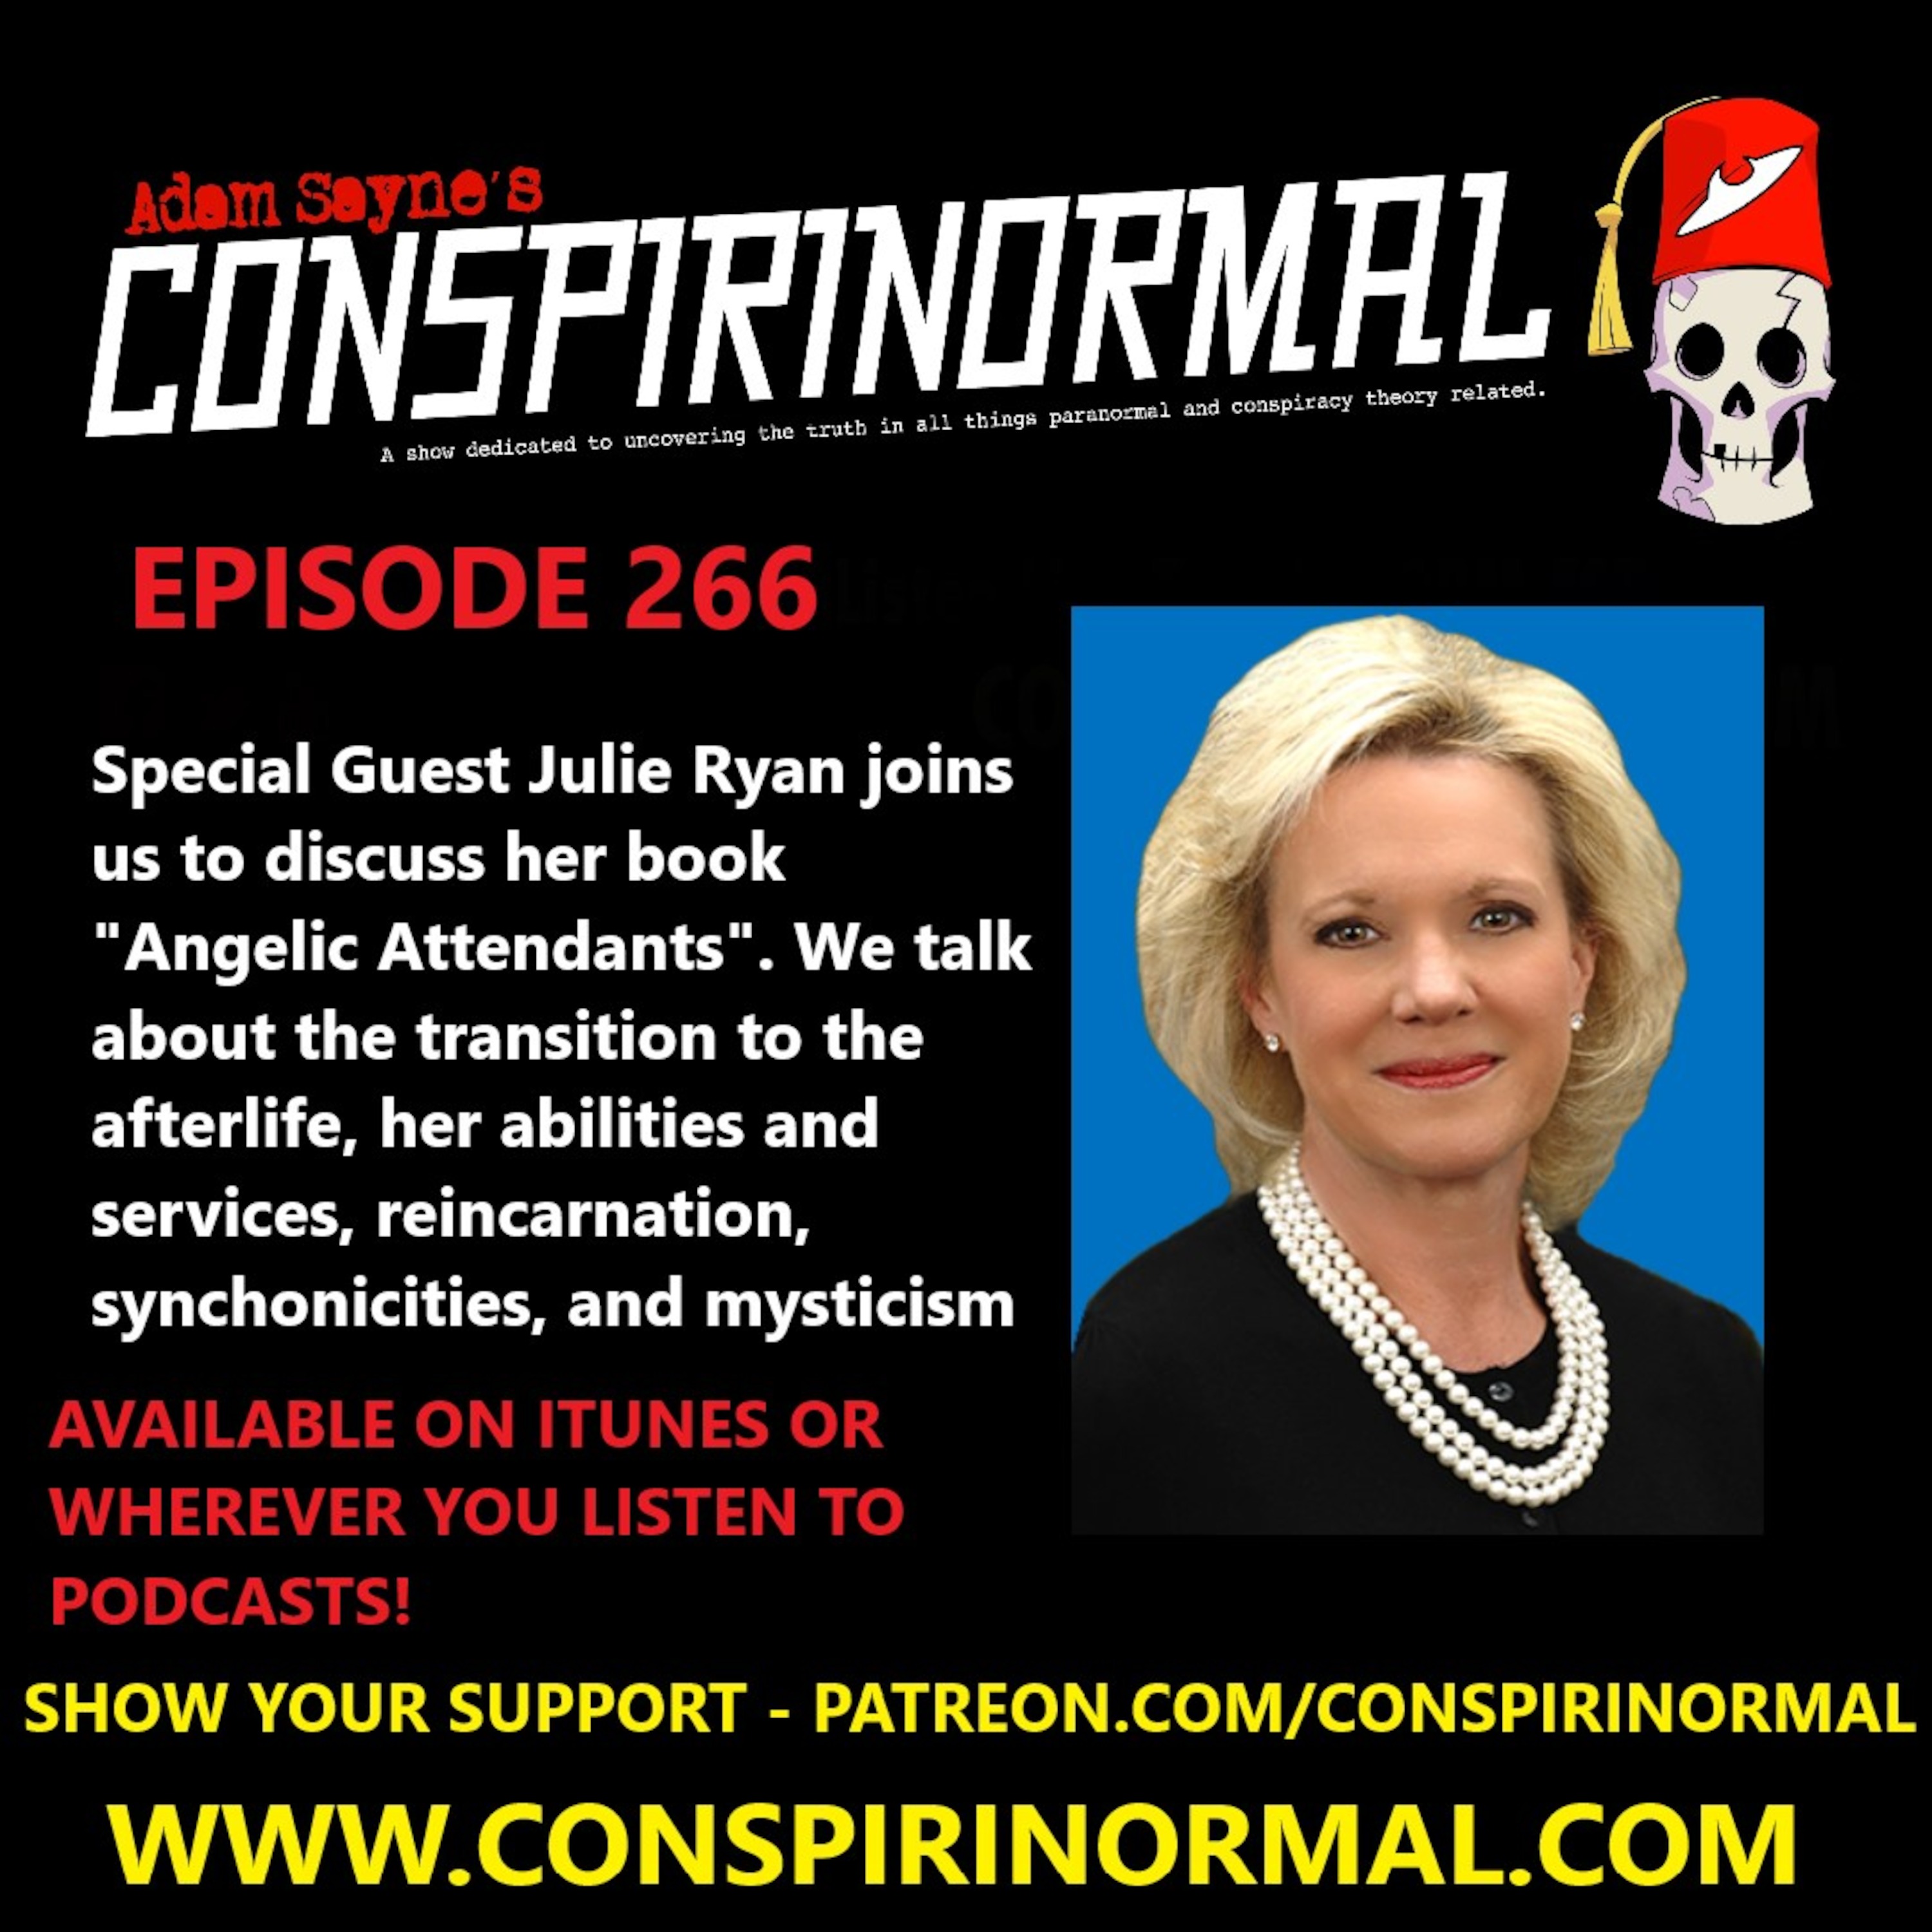 Conspirinormal Episode 266- Julie Ryan (Angelic Attendants)